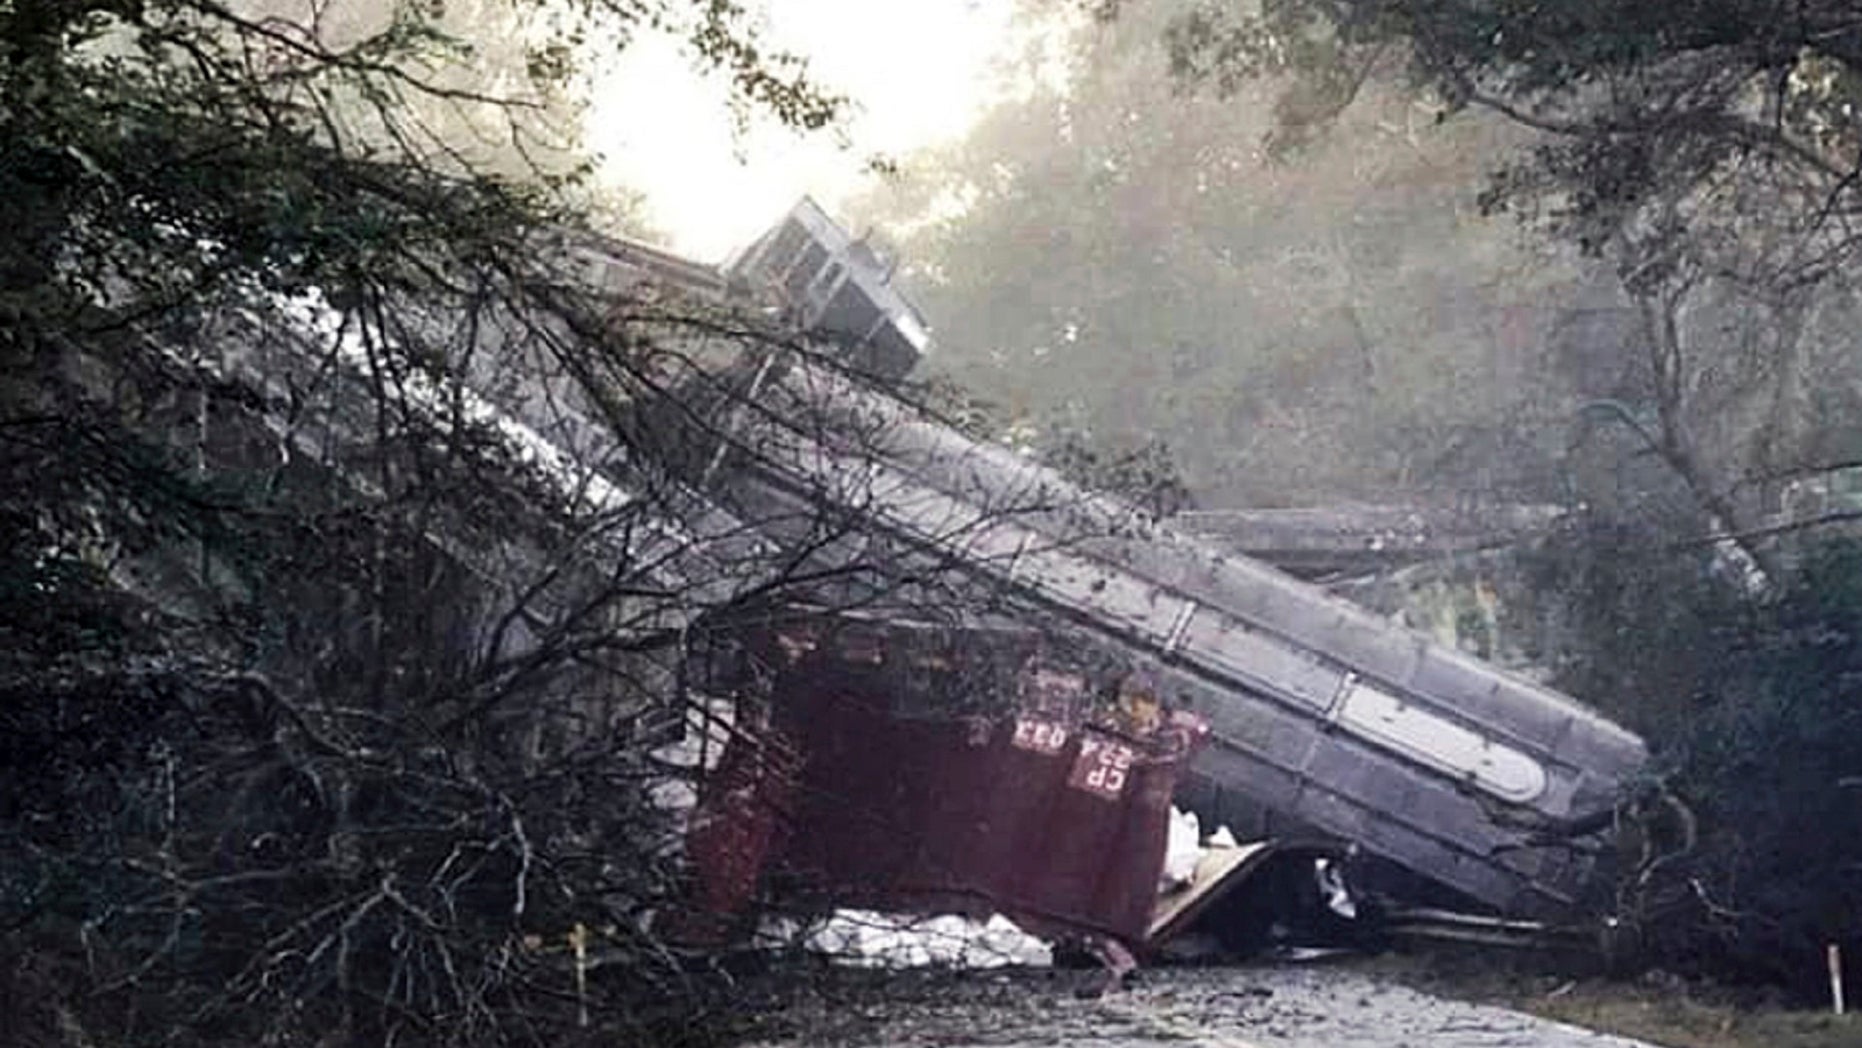 derailment involves 30 rail cars; no one injured, company says